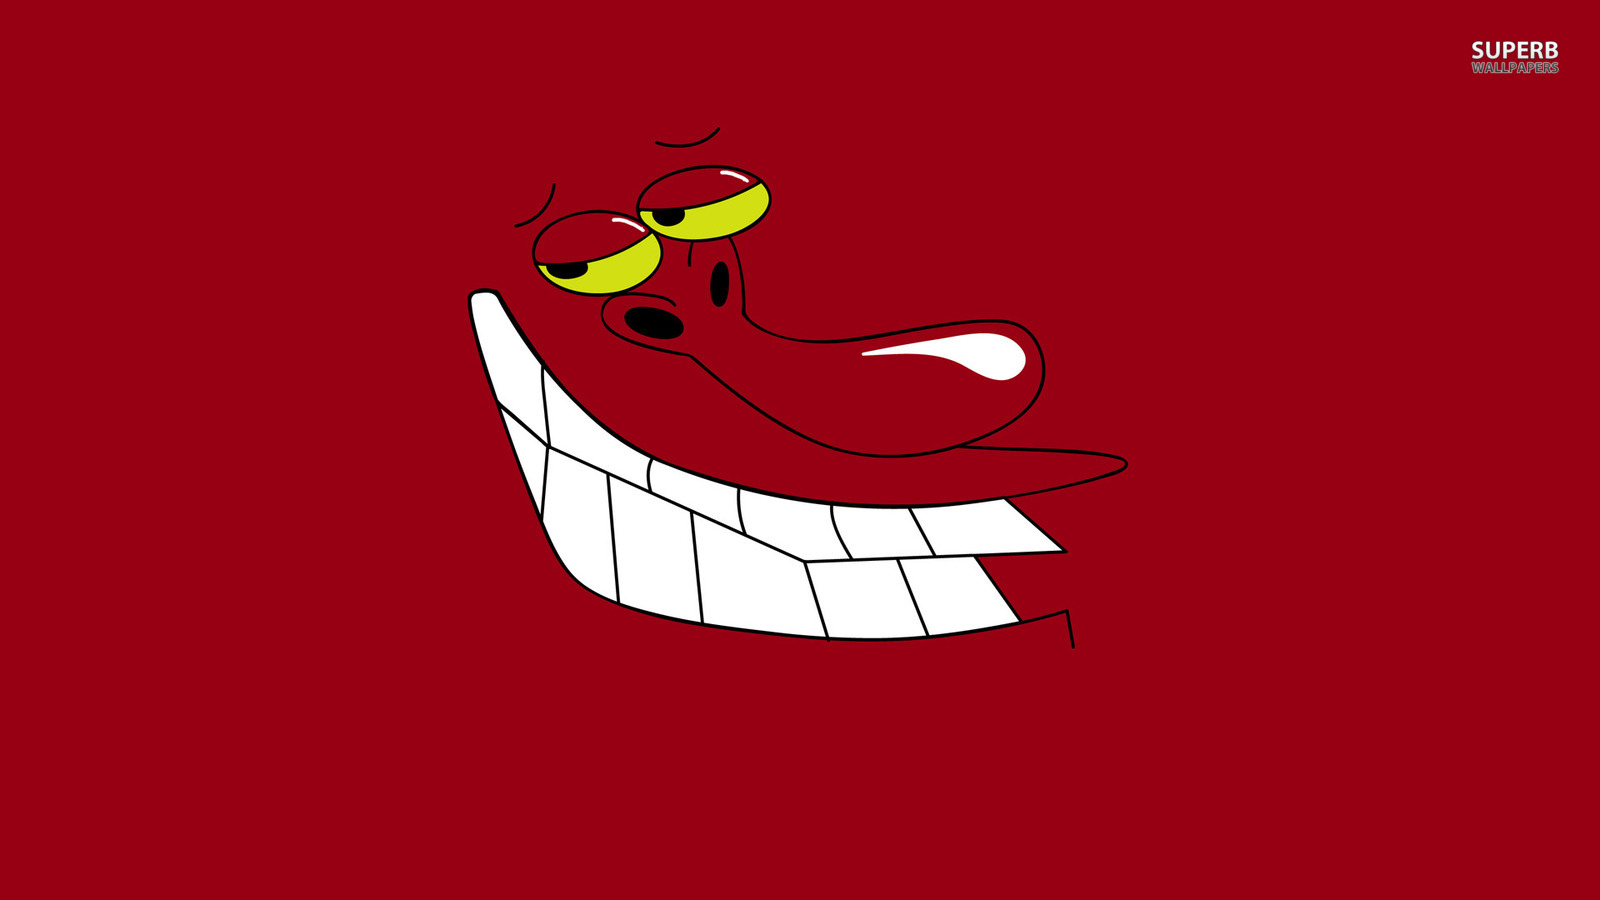 The Red Guy - Cartoon Network Wallpaper (38680115) - Fanpop